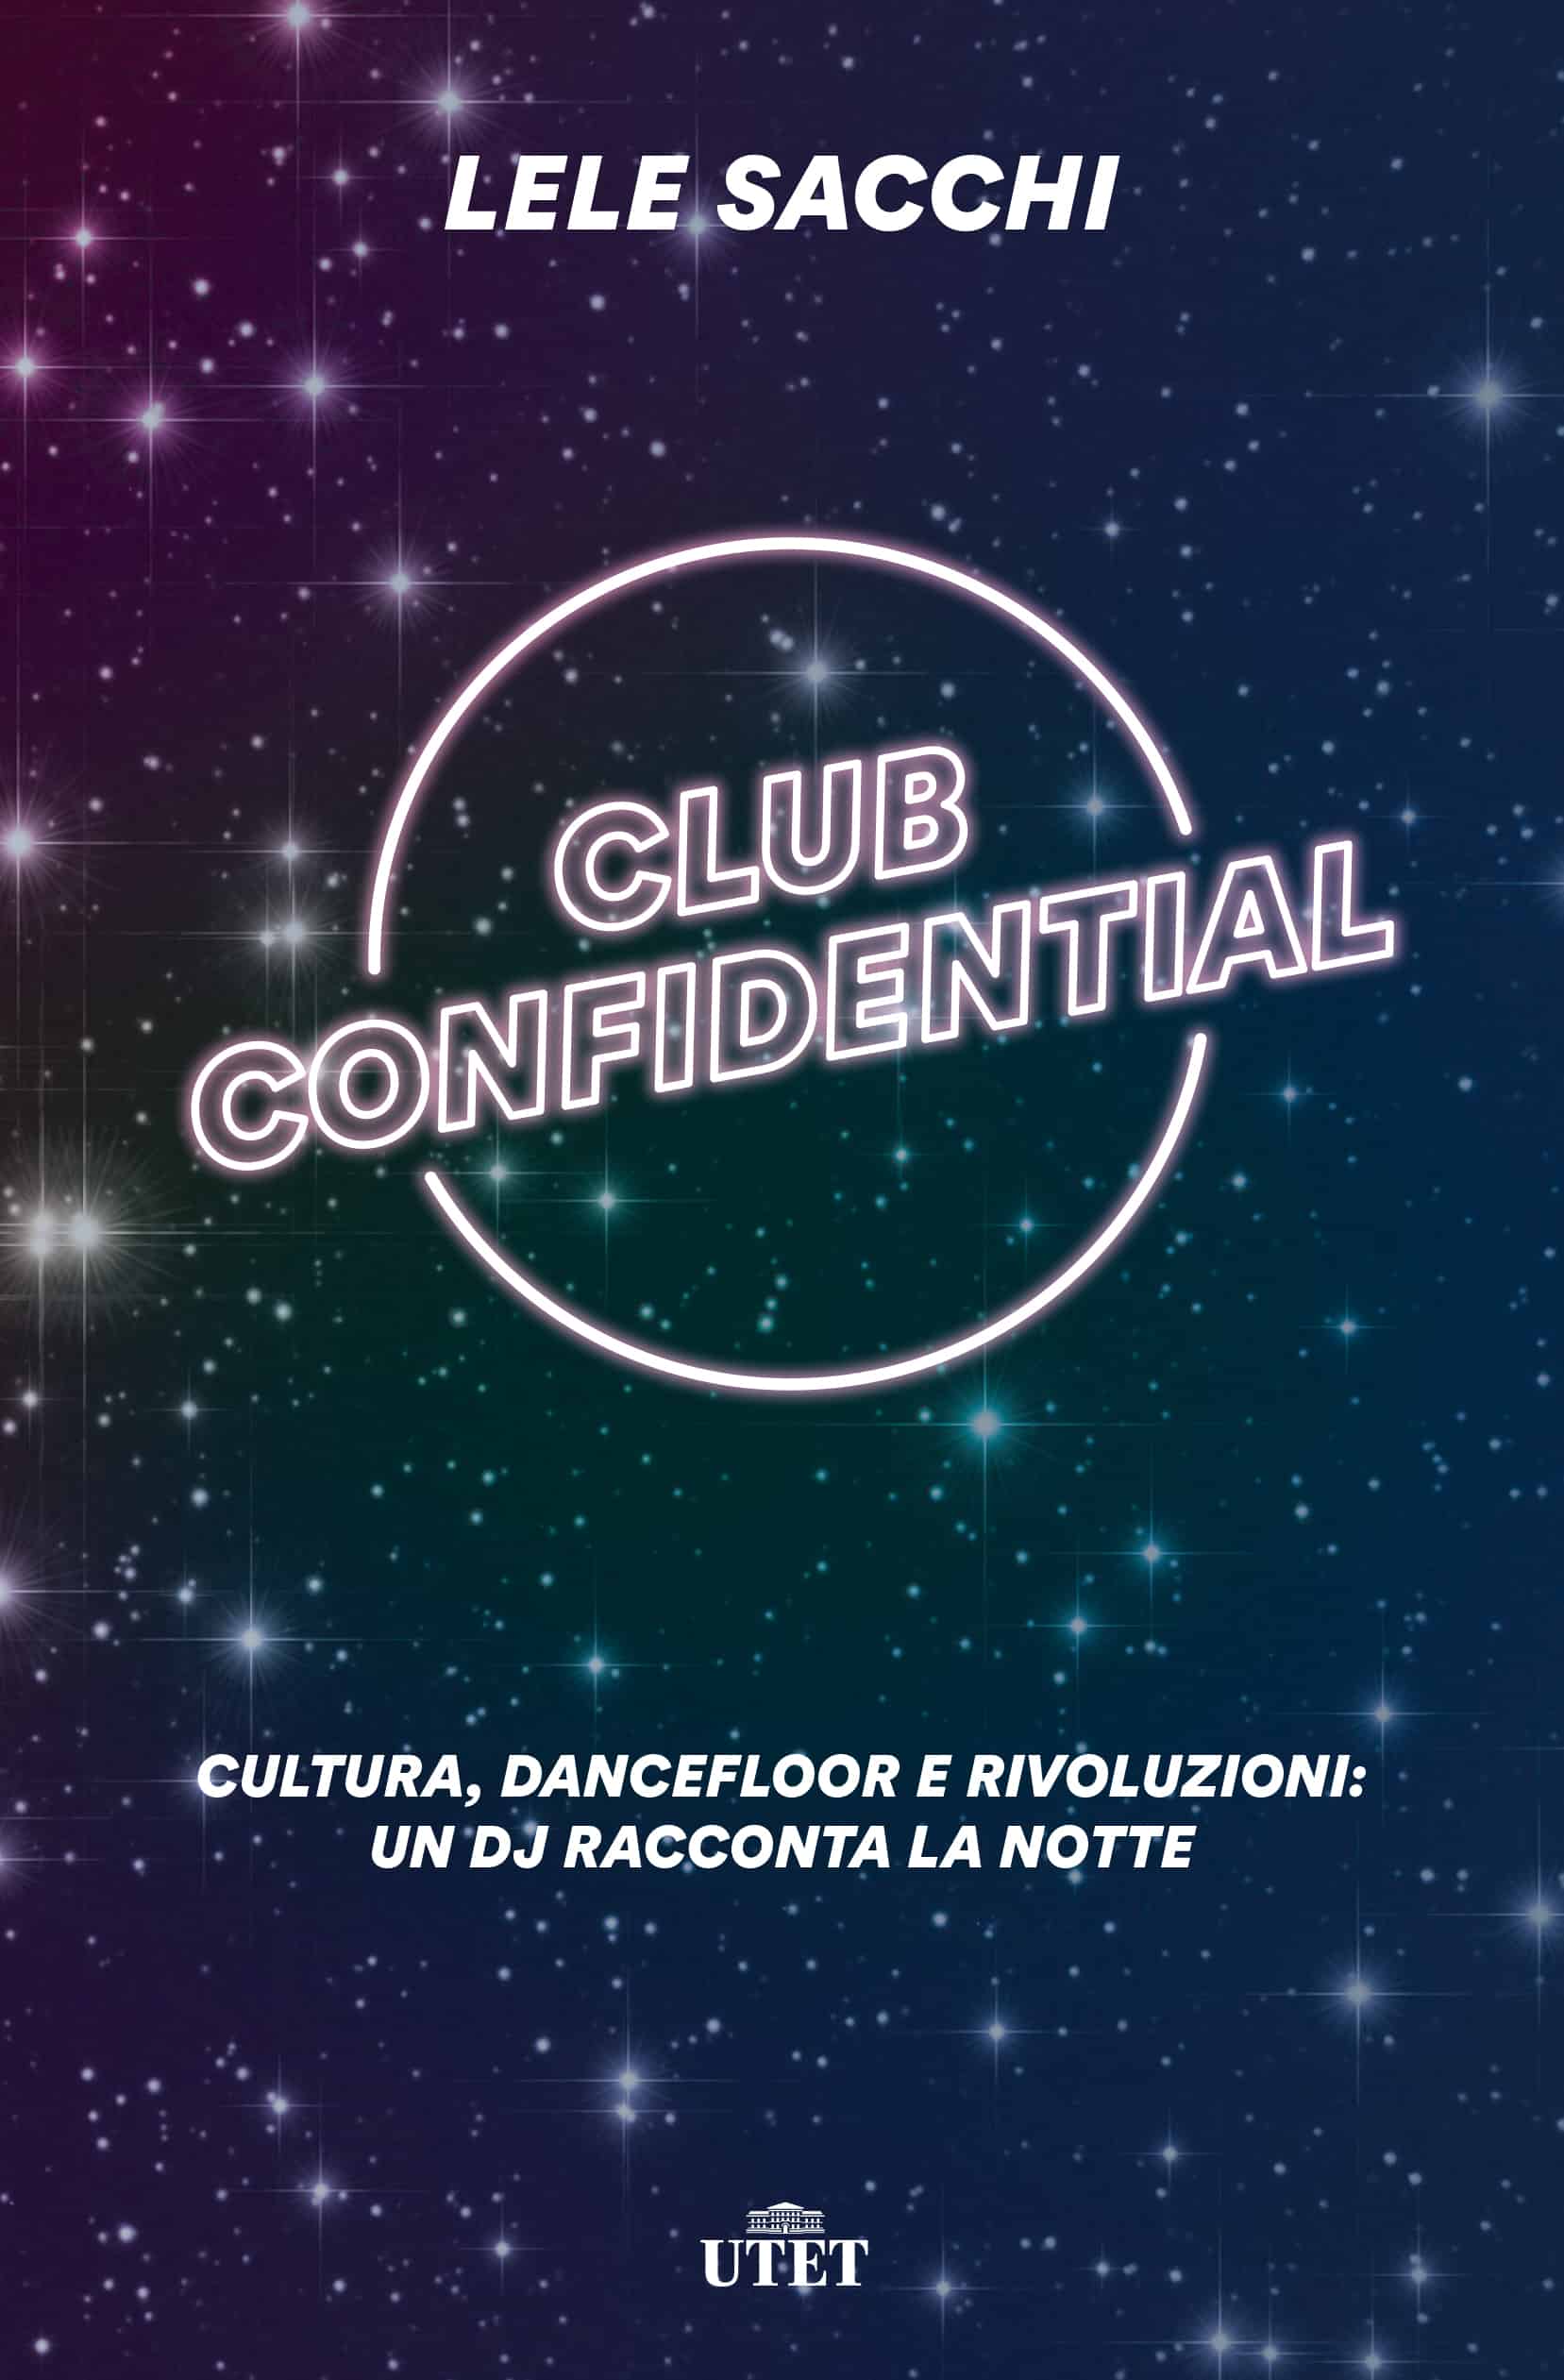 Lele Sacchi presenta "Club Confidential"